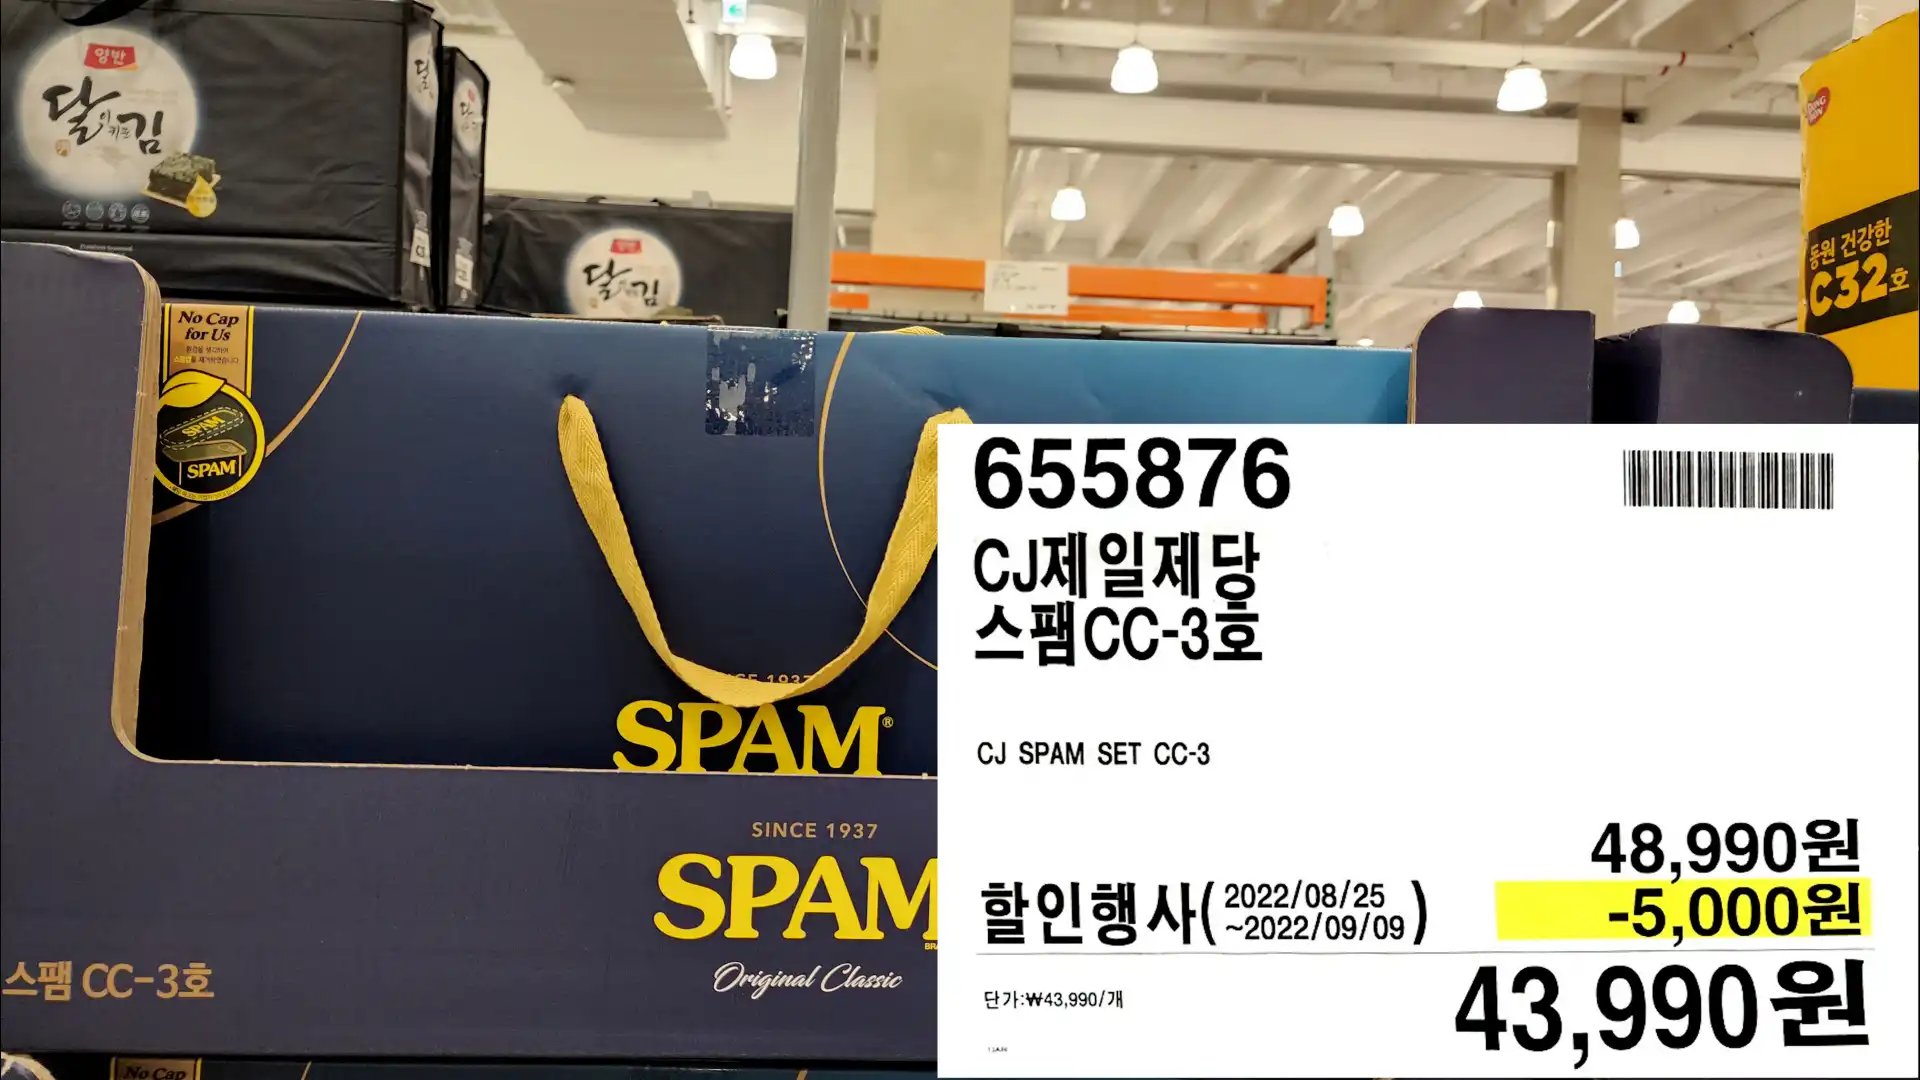 CJ제일제당
스팸CC-3호
CJ SPAM SET CC-3
2022/08/25
43,990원